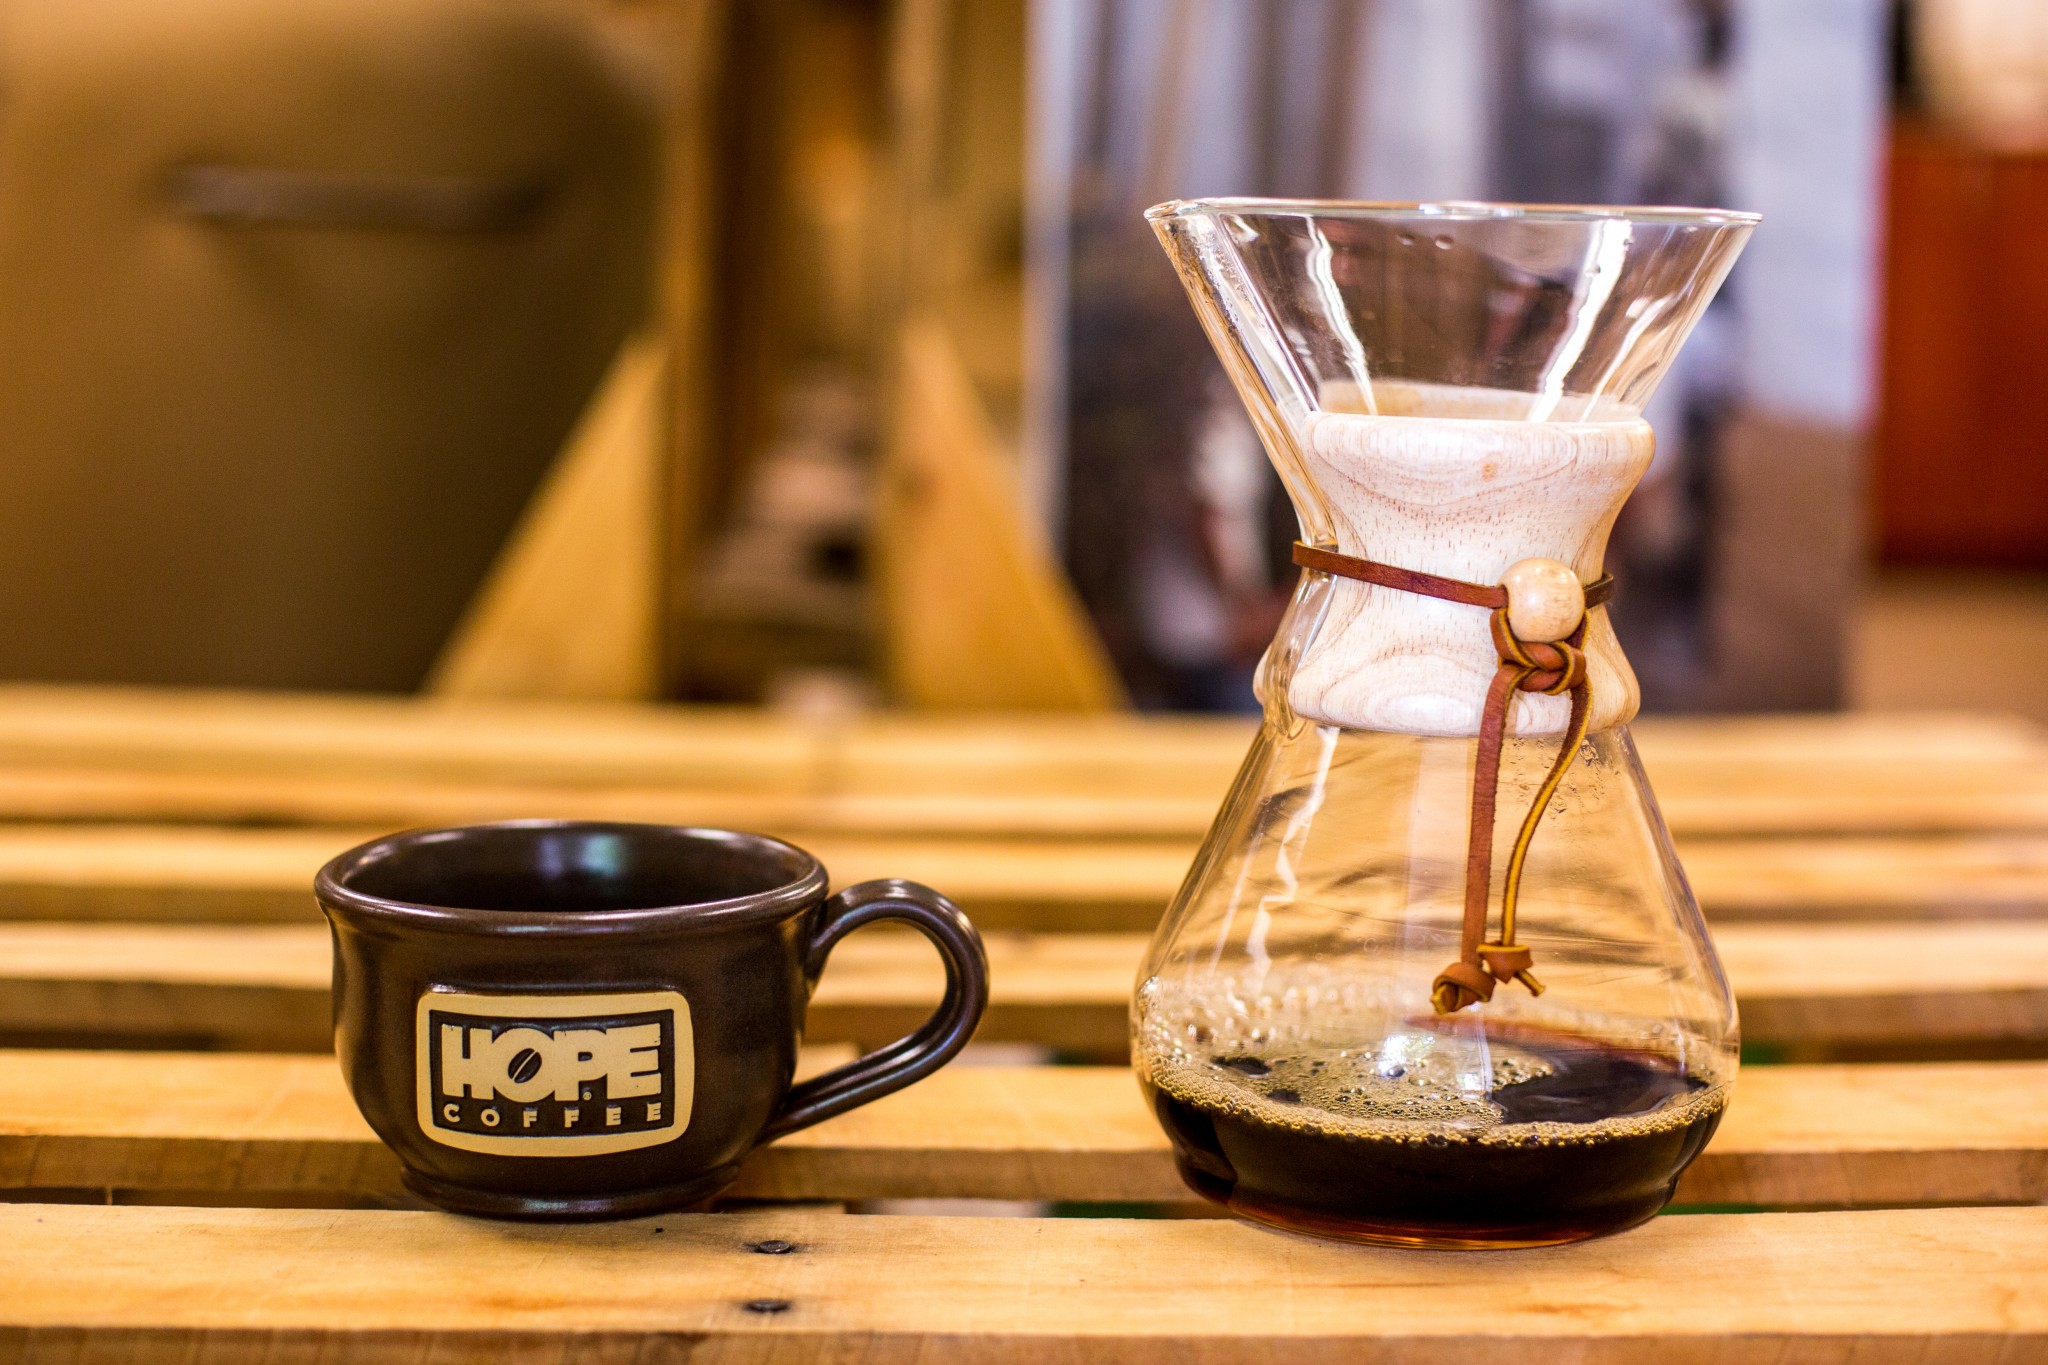 https://www.hopecoffee.com/wp-content/uploads/2017/04/Chemex-Brewing-Method-How-to-Make-Chemex-Coffee1.jpg